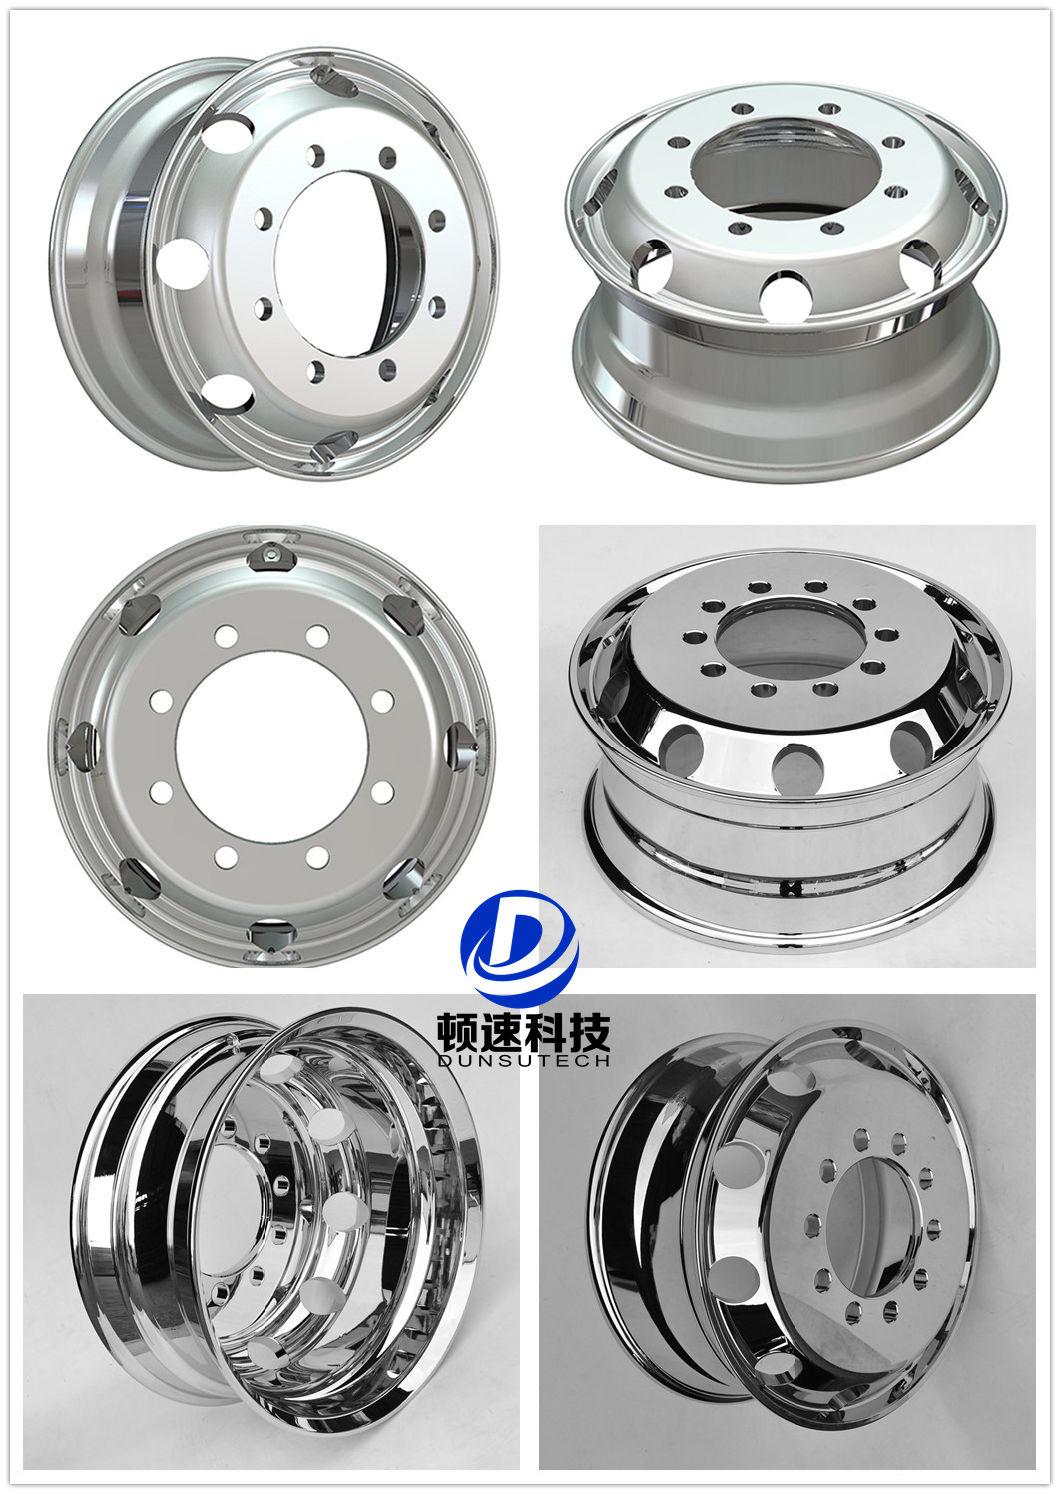 Chrome Plated Steel Wheel High Quality 28 Inch Rims Chrome Hot Chrome Rims